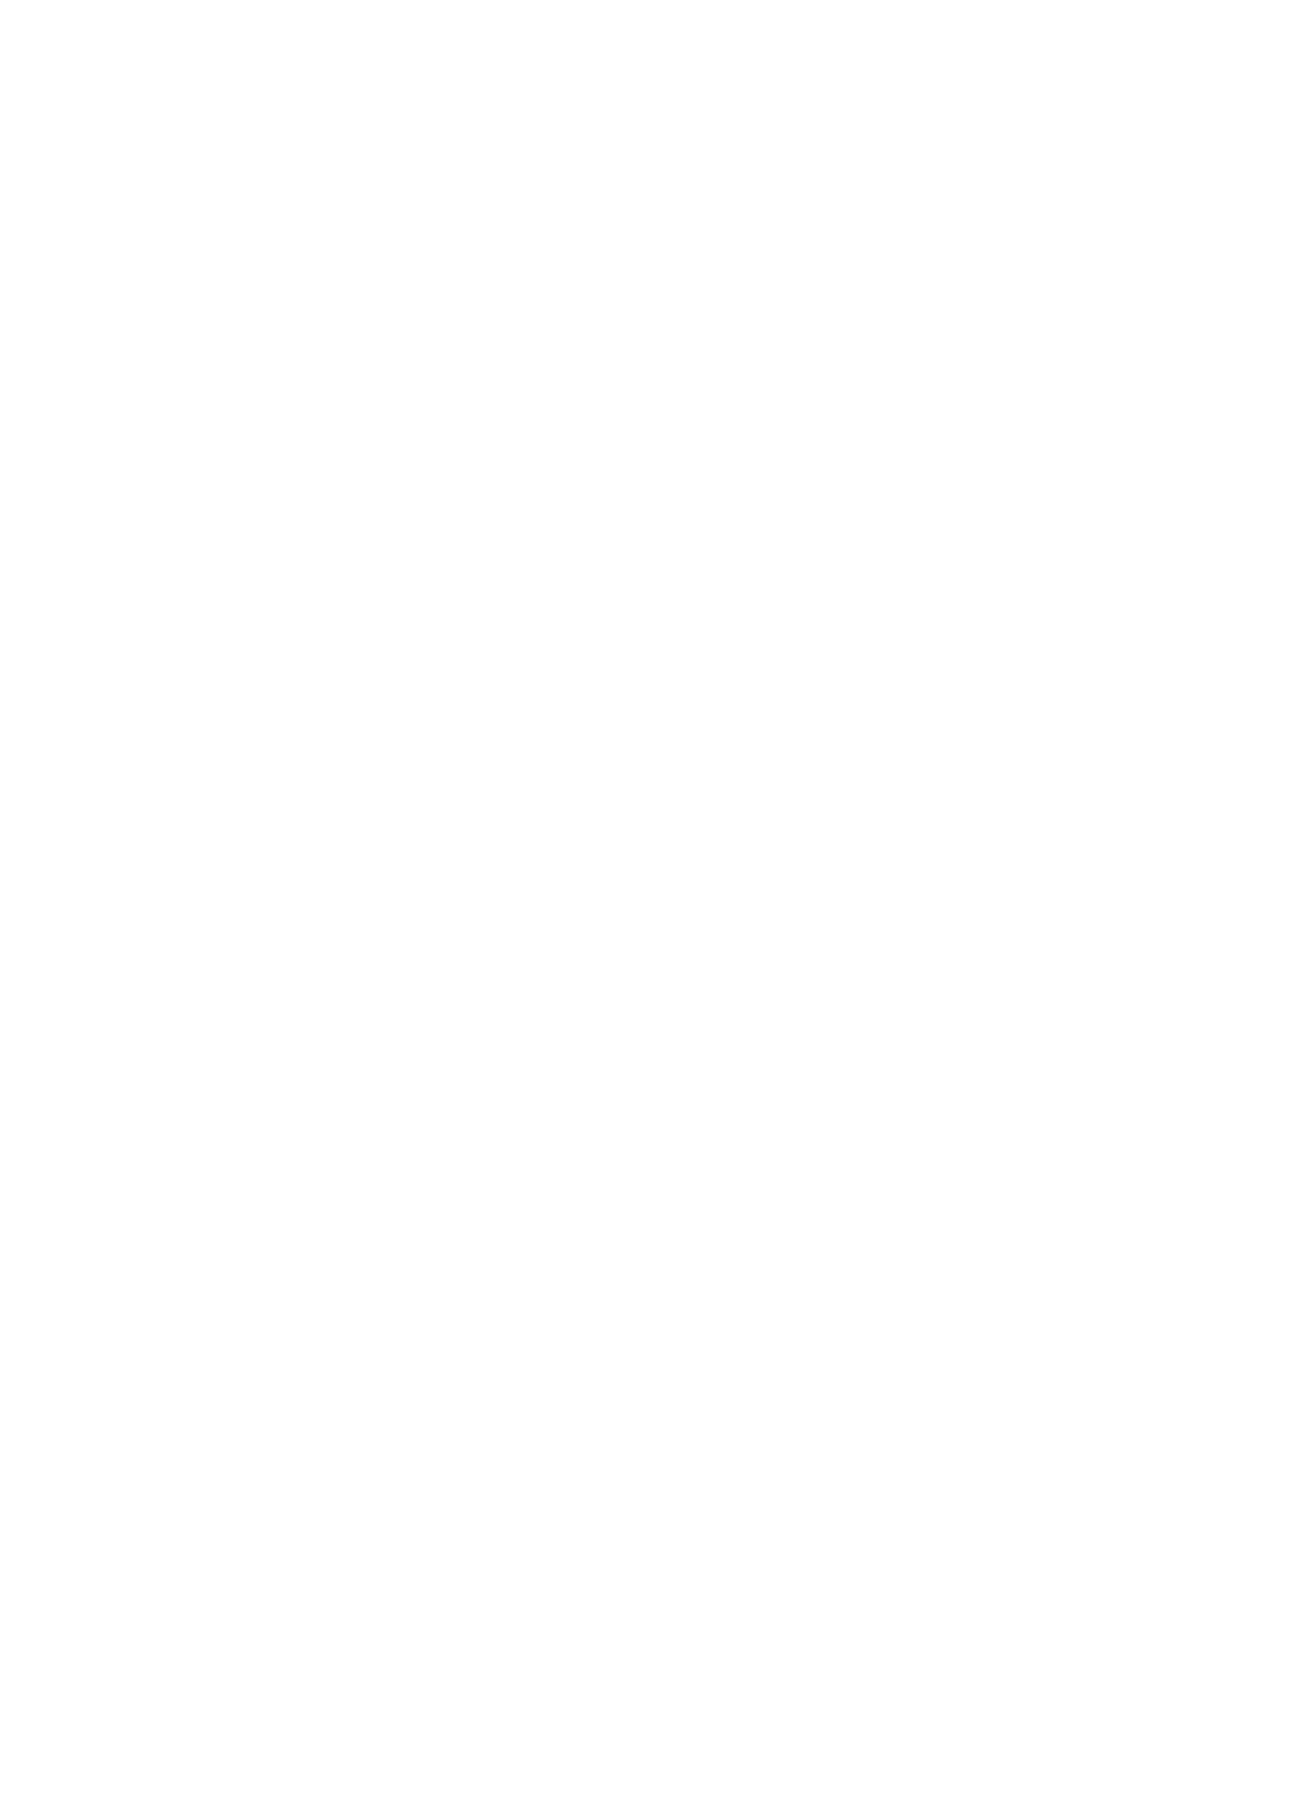 Democracy Collaborative